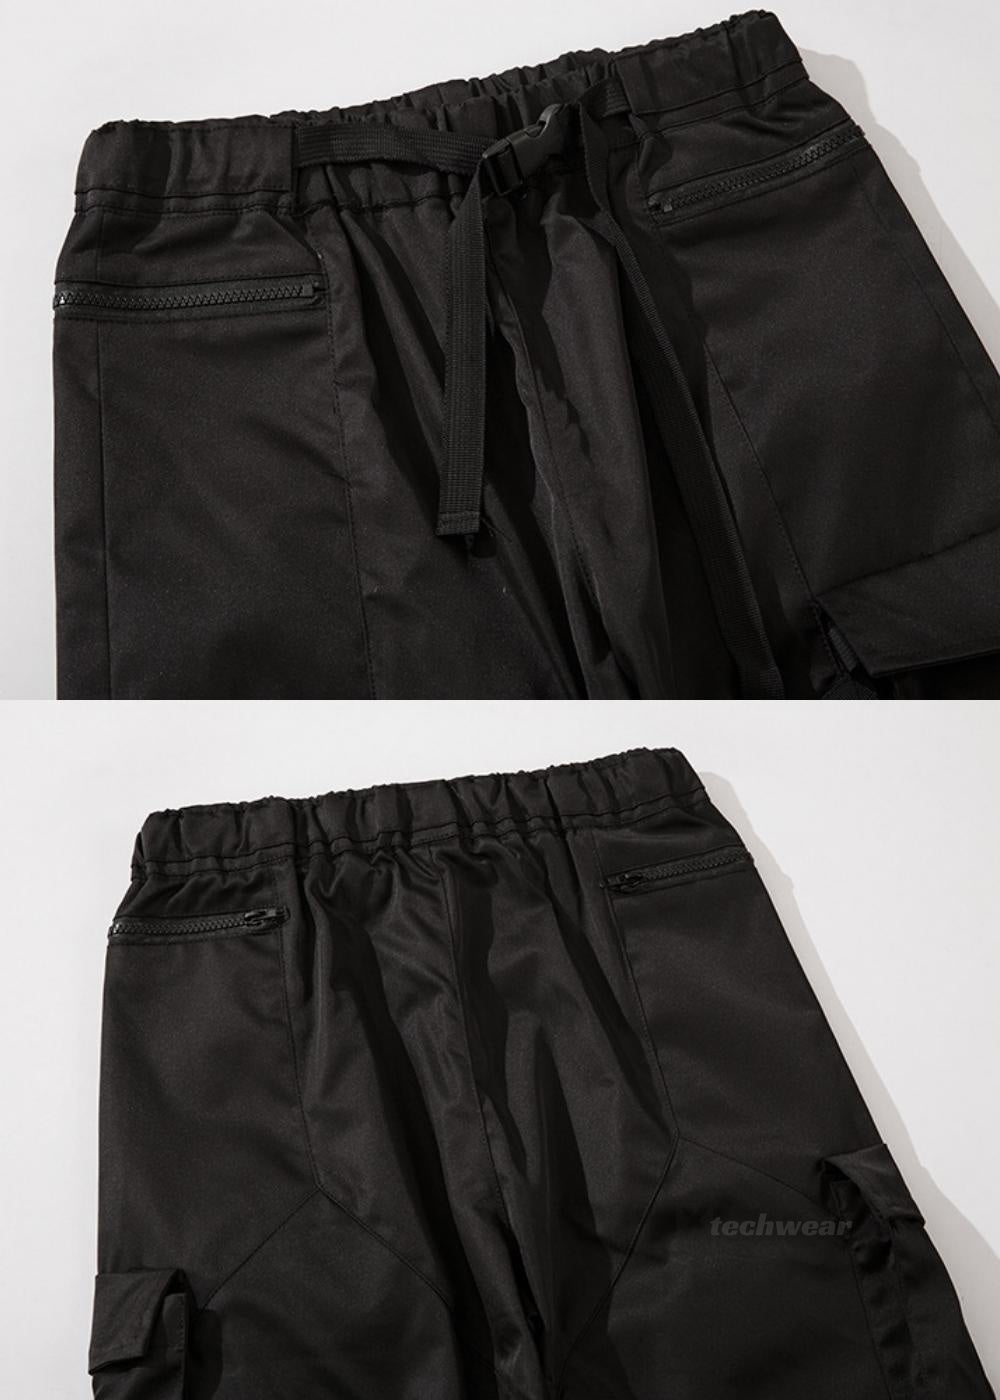 Darkwear Improved Techwear Style Joggers - Darkwear Pants - X